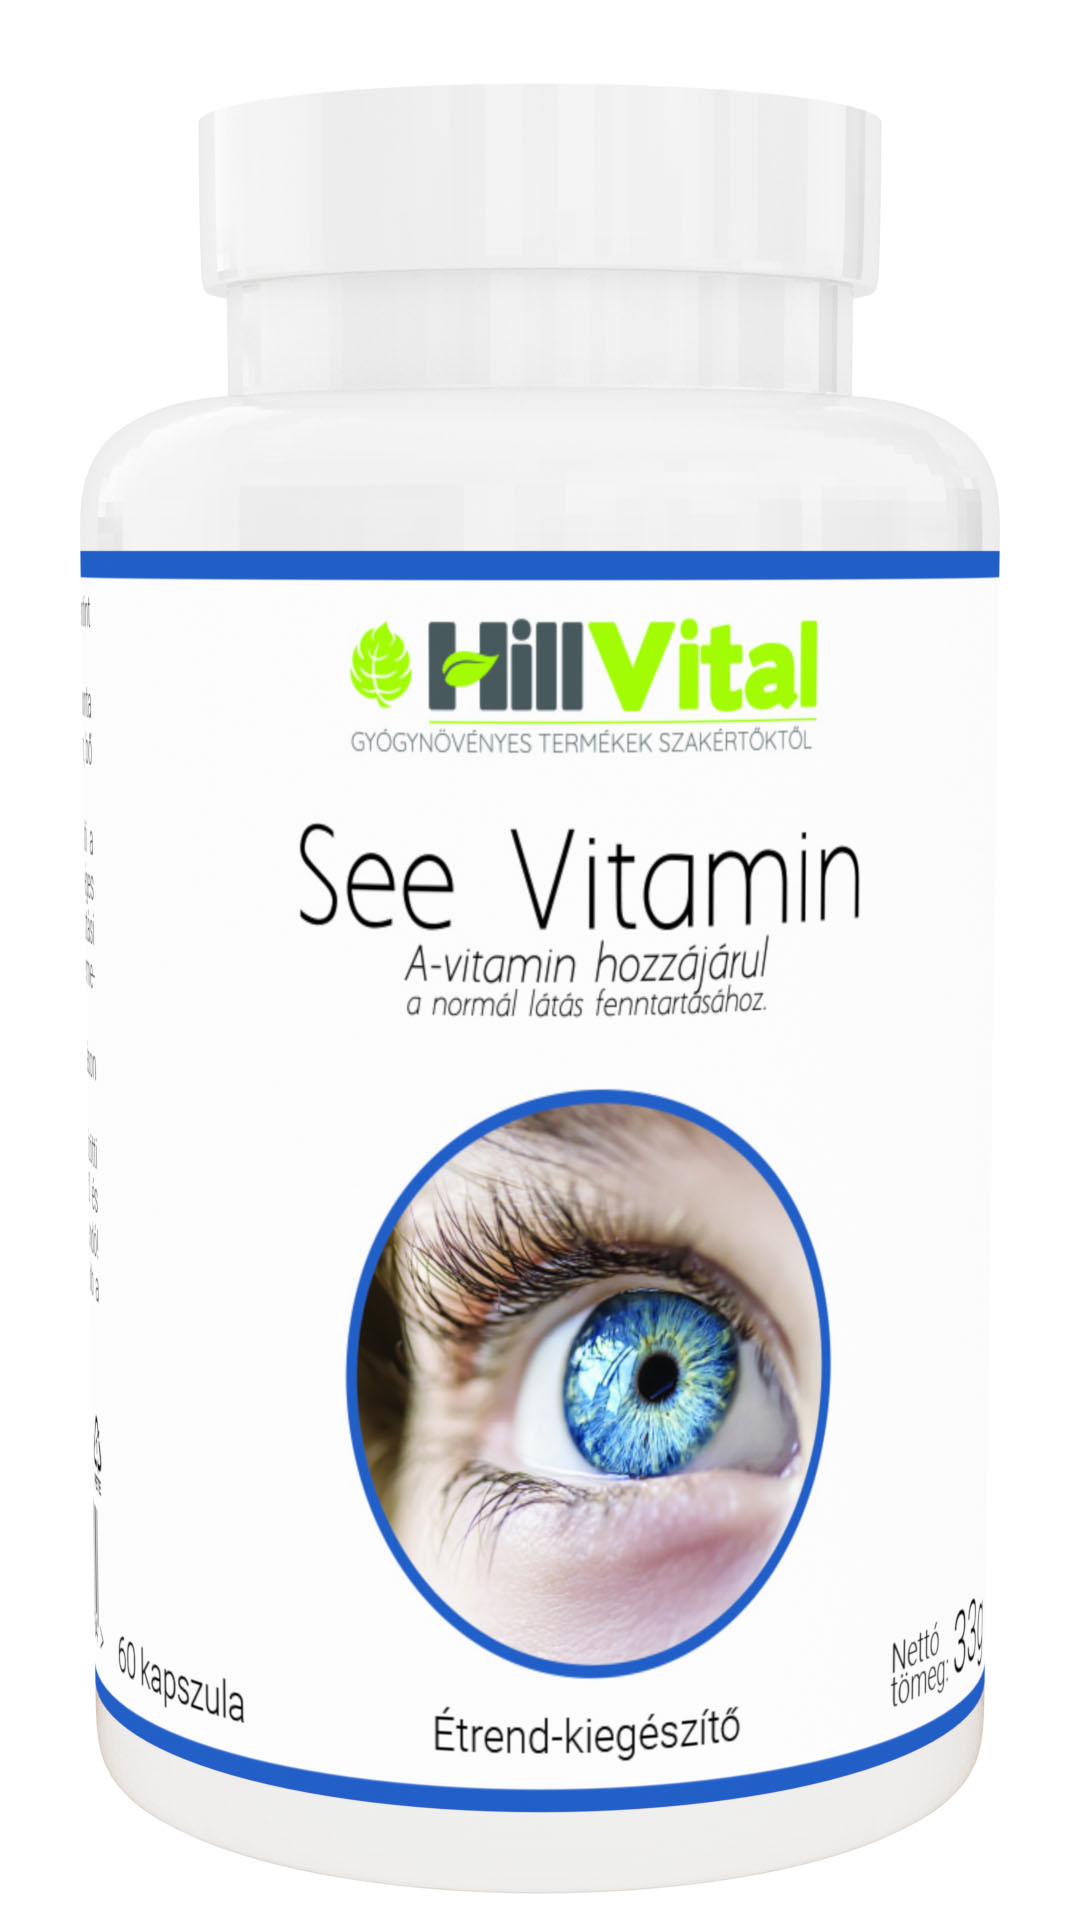 See vitamin